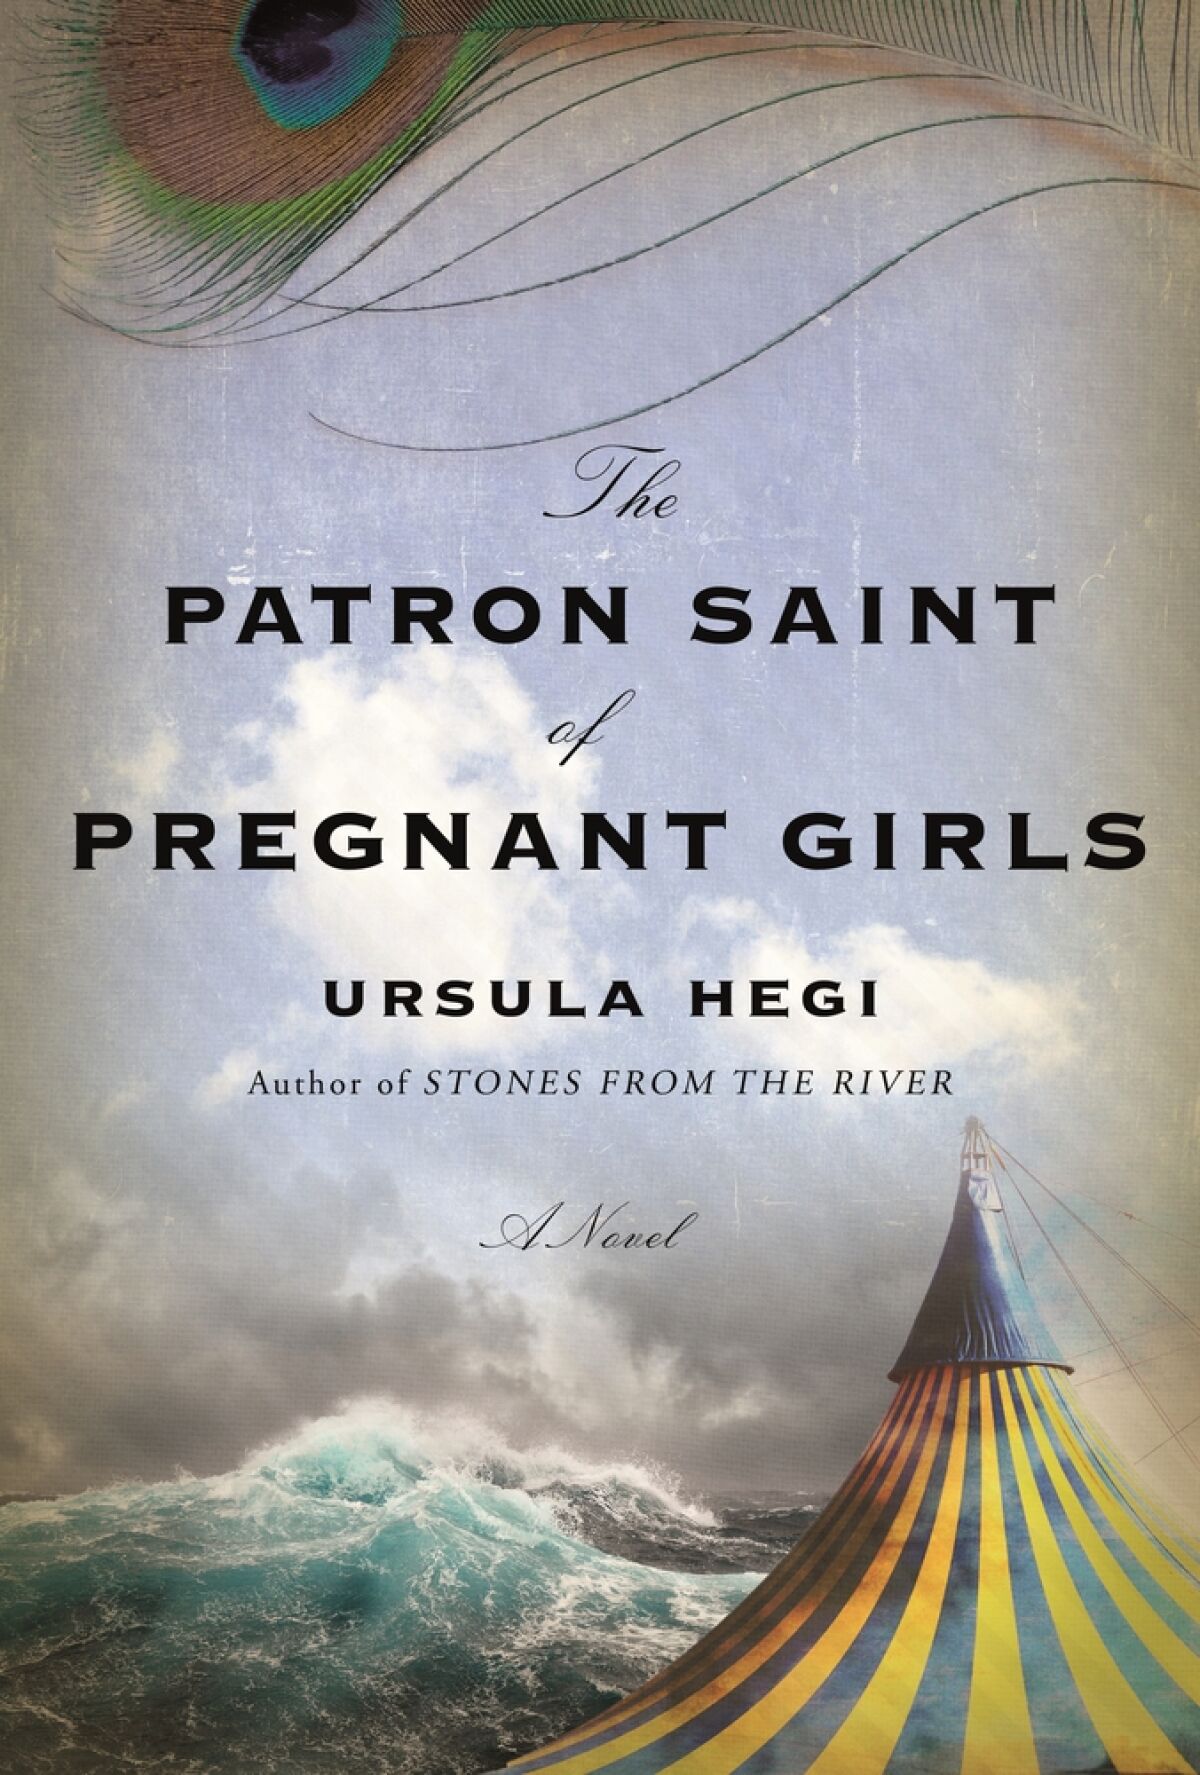 "The Patron Saint of Pregnant Girls," by Ursula Hegi